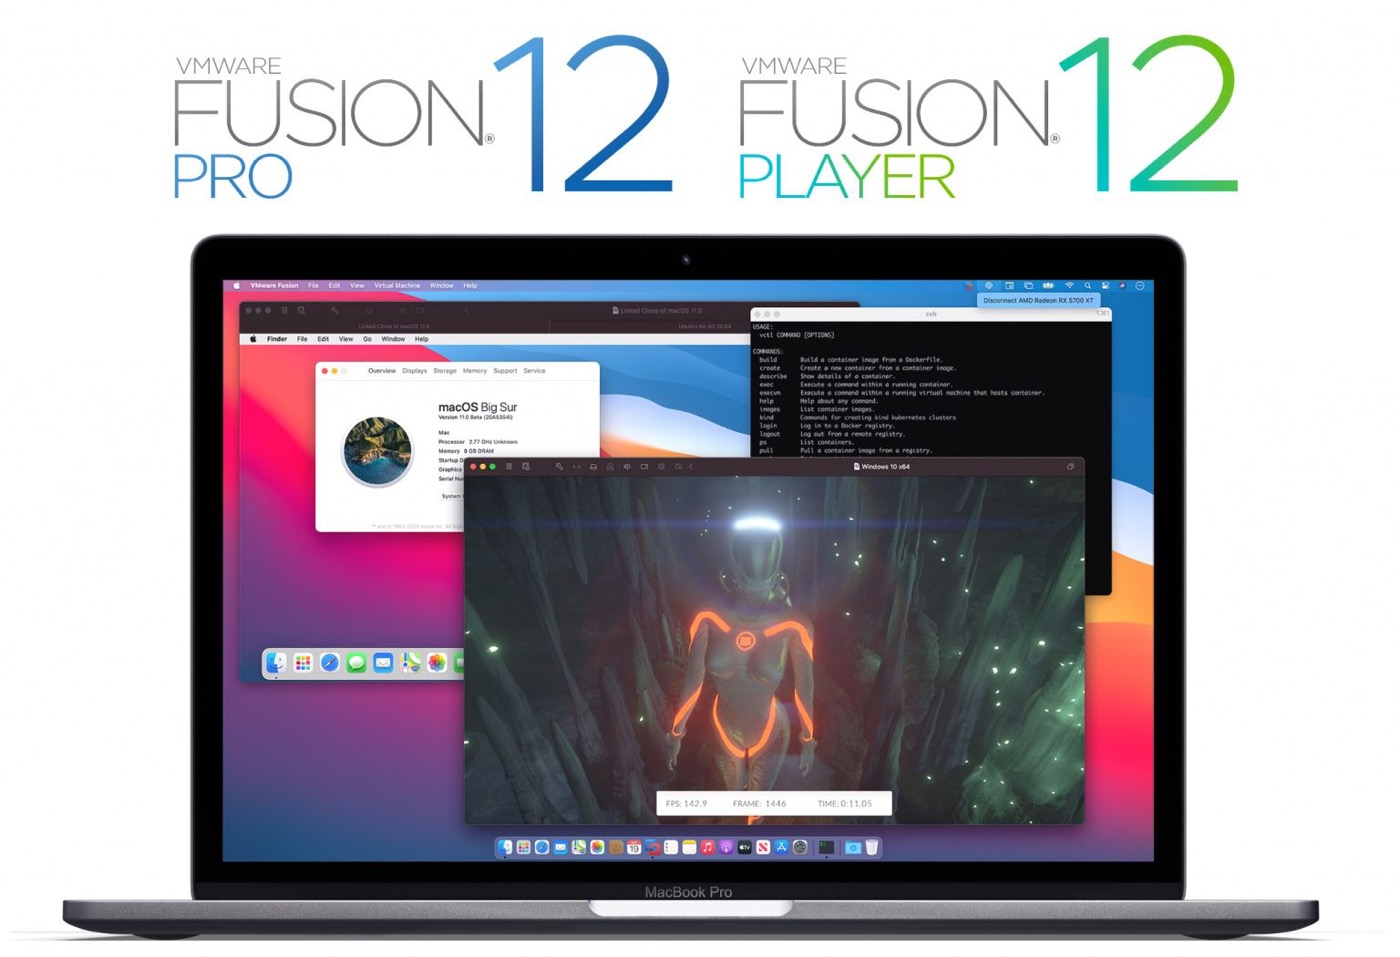 release date for vmware fusion 12